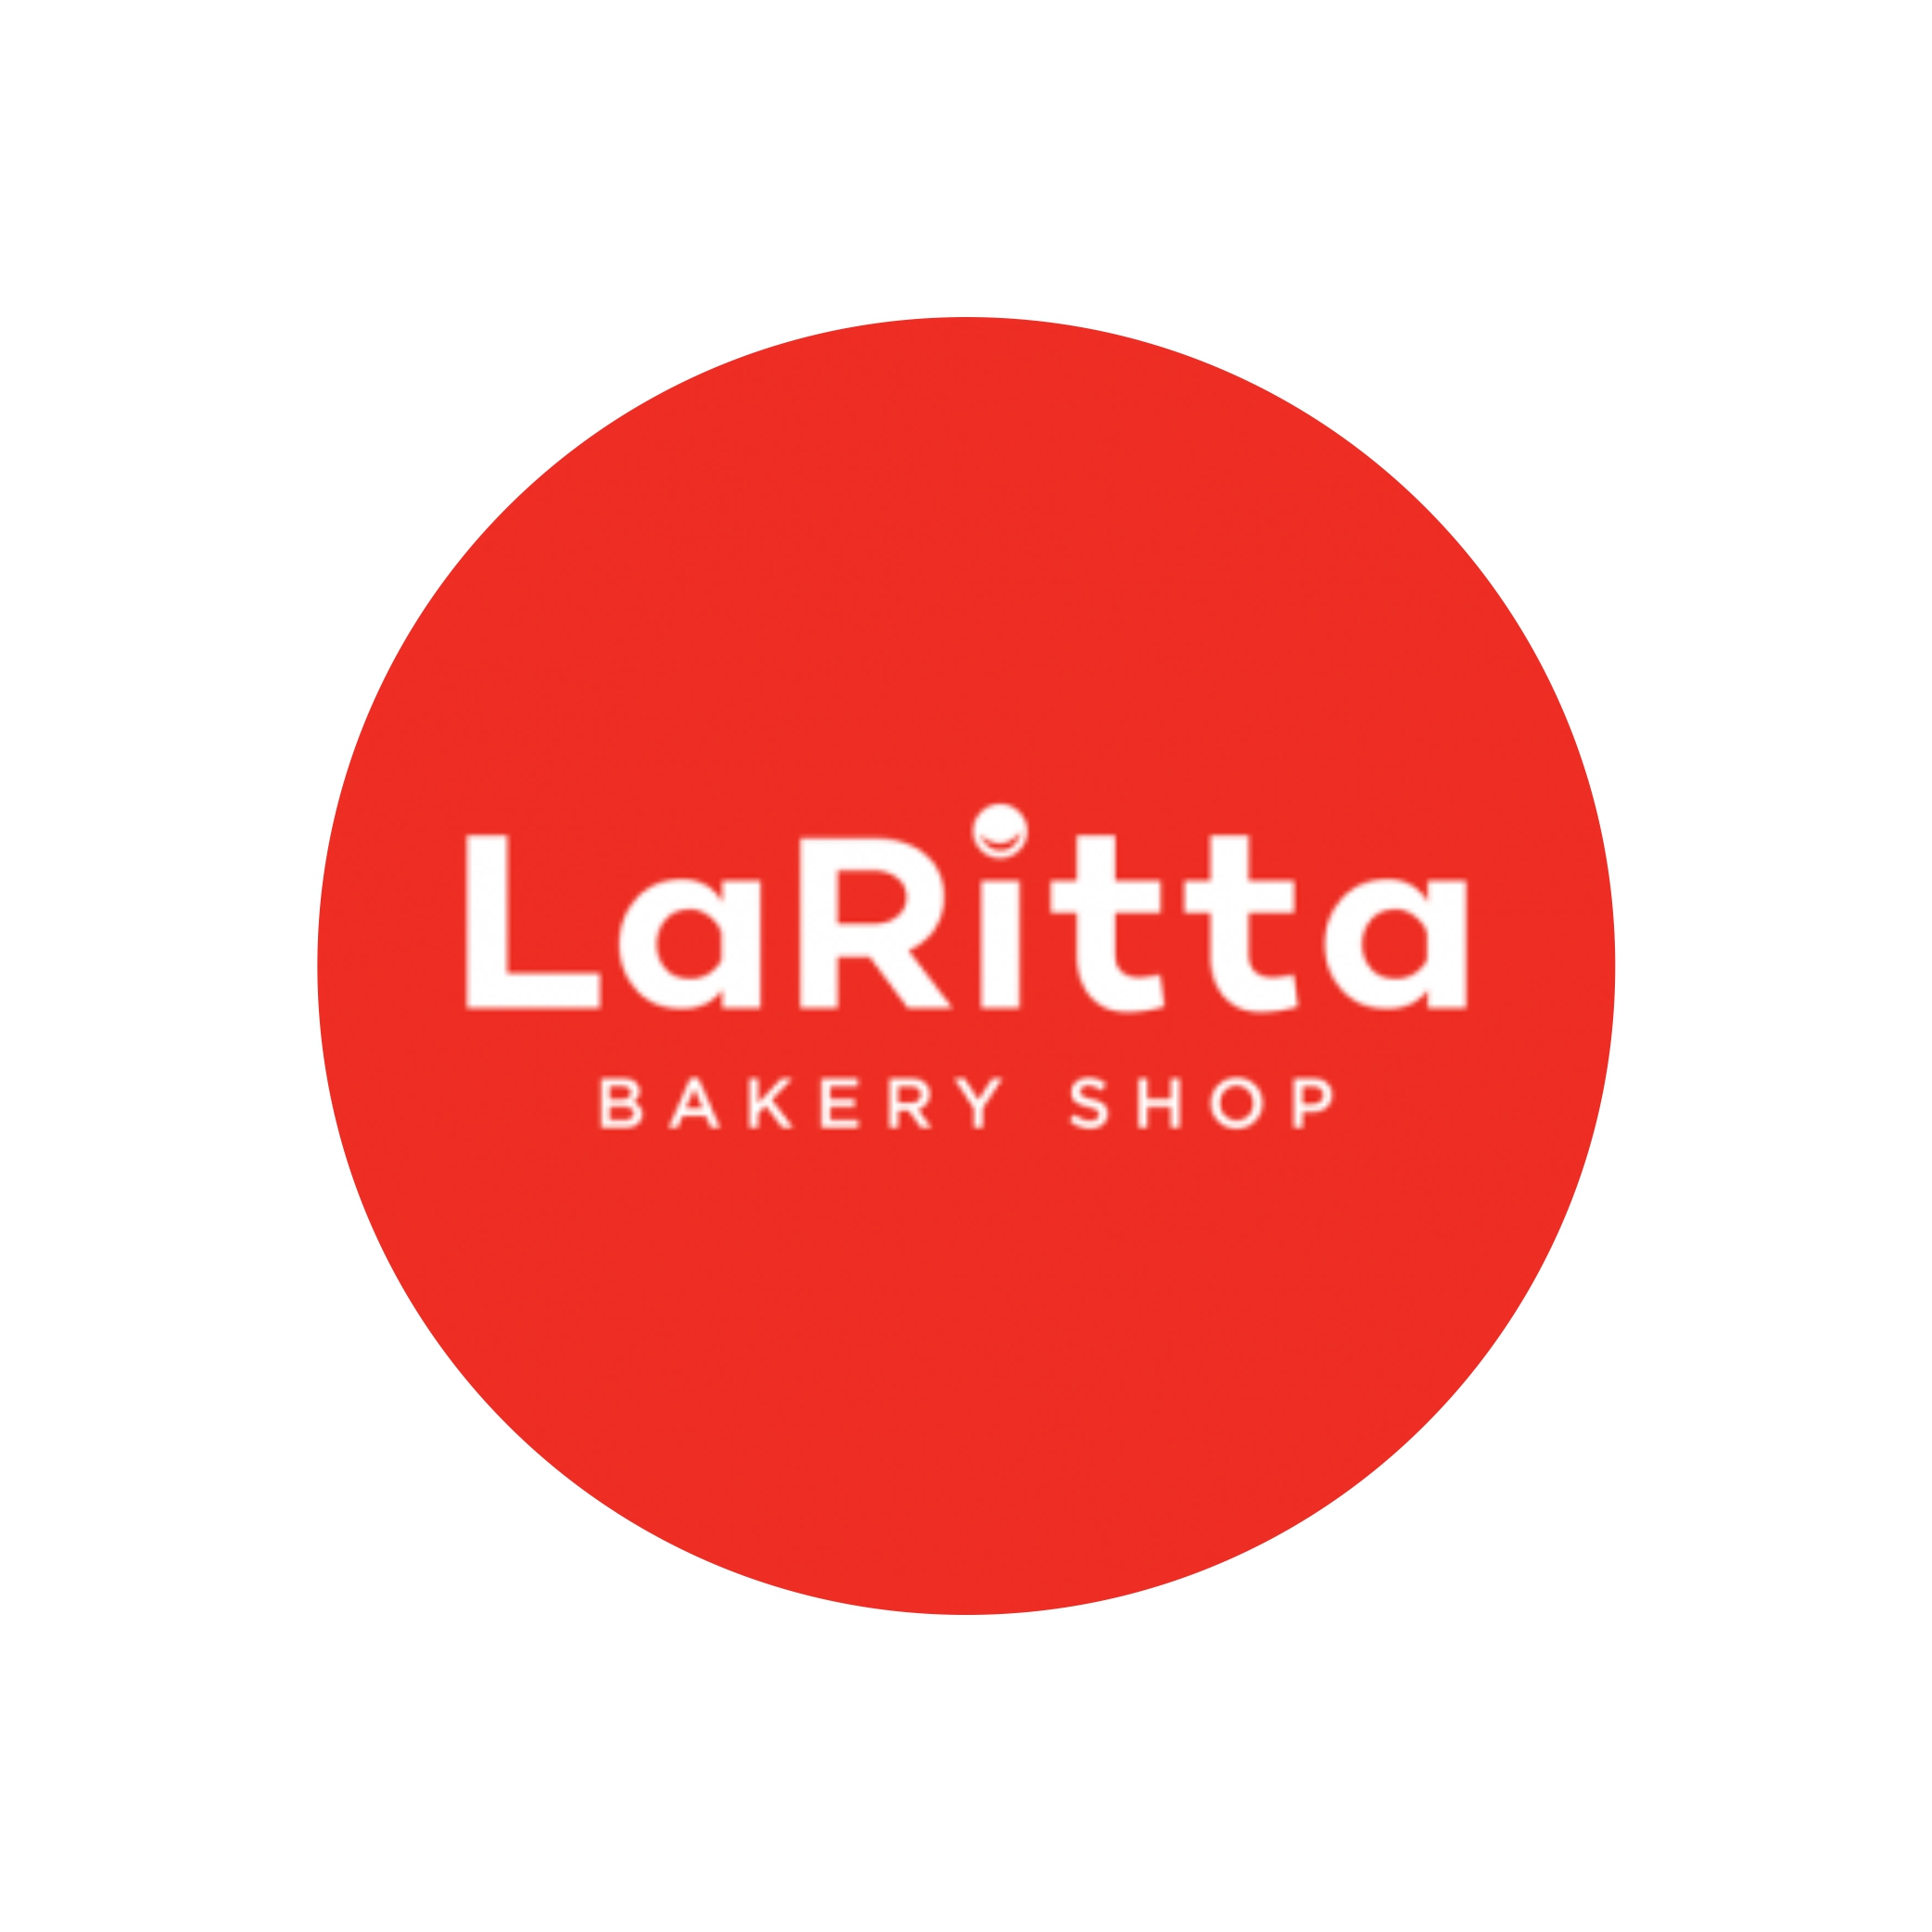 Laritta Bakery Shop